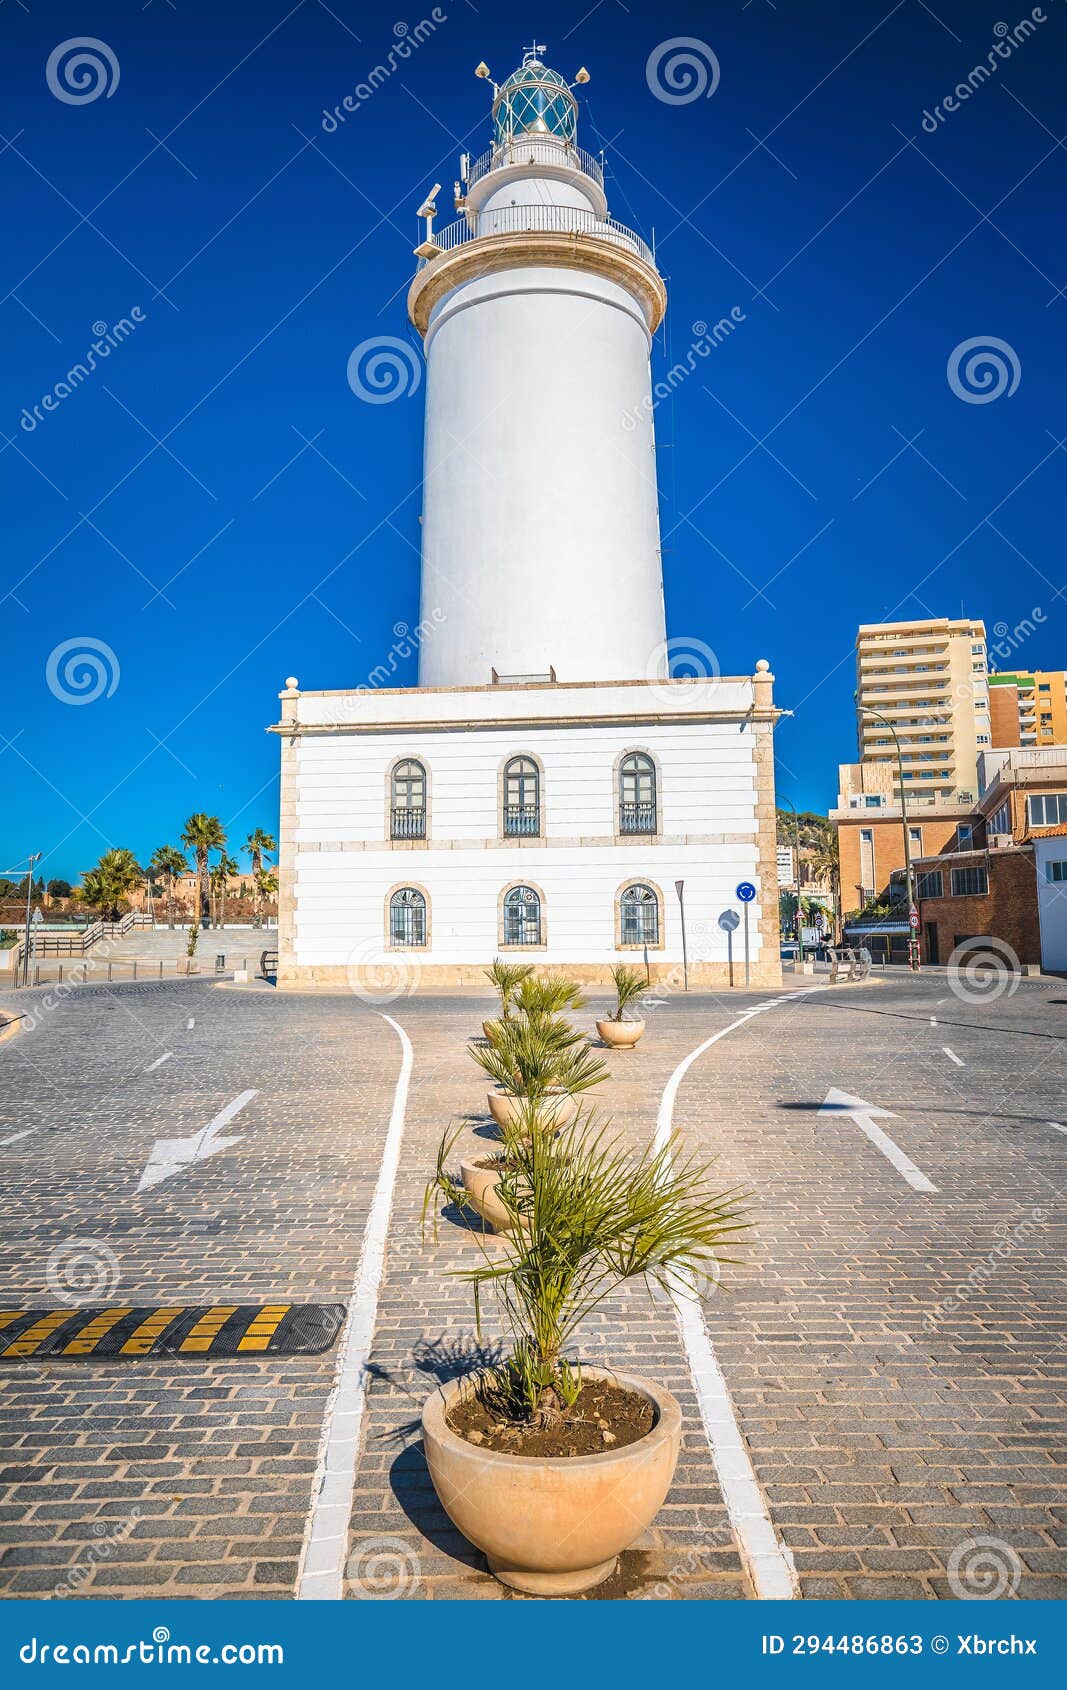 la farola de malaga lighthouse street view